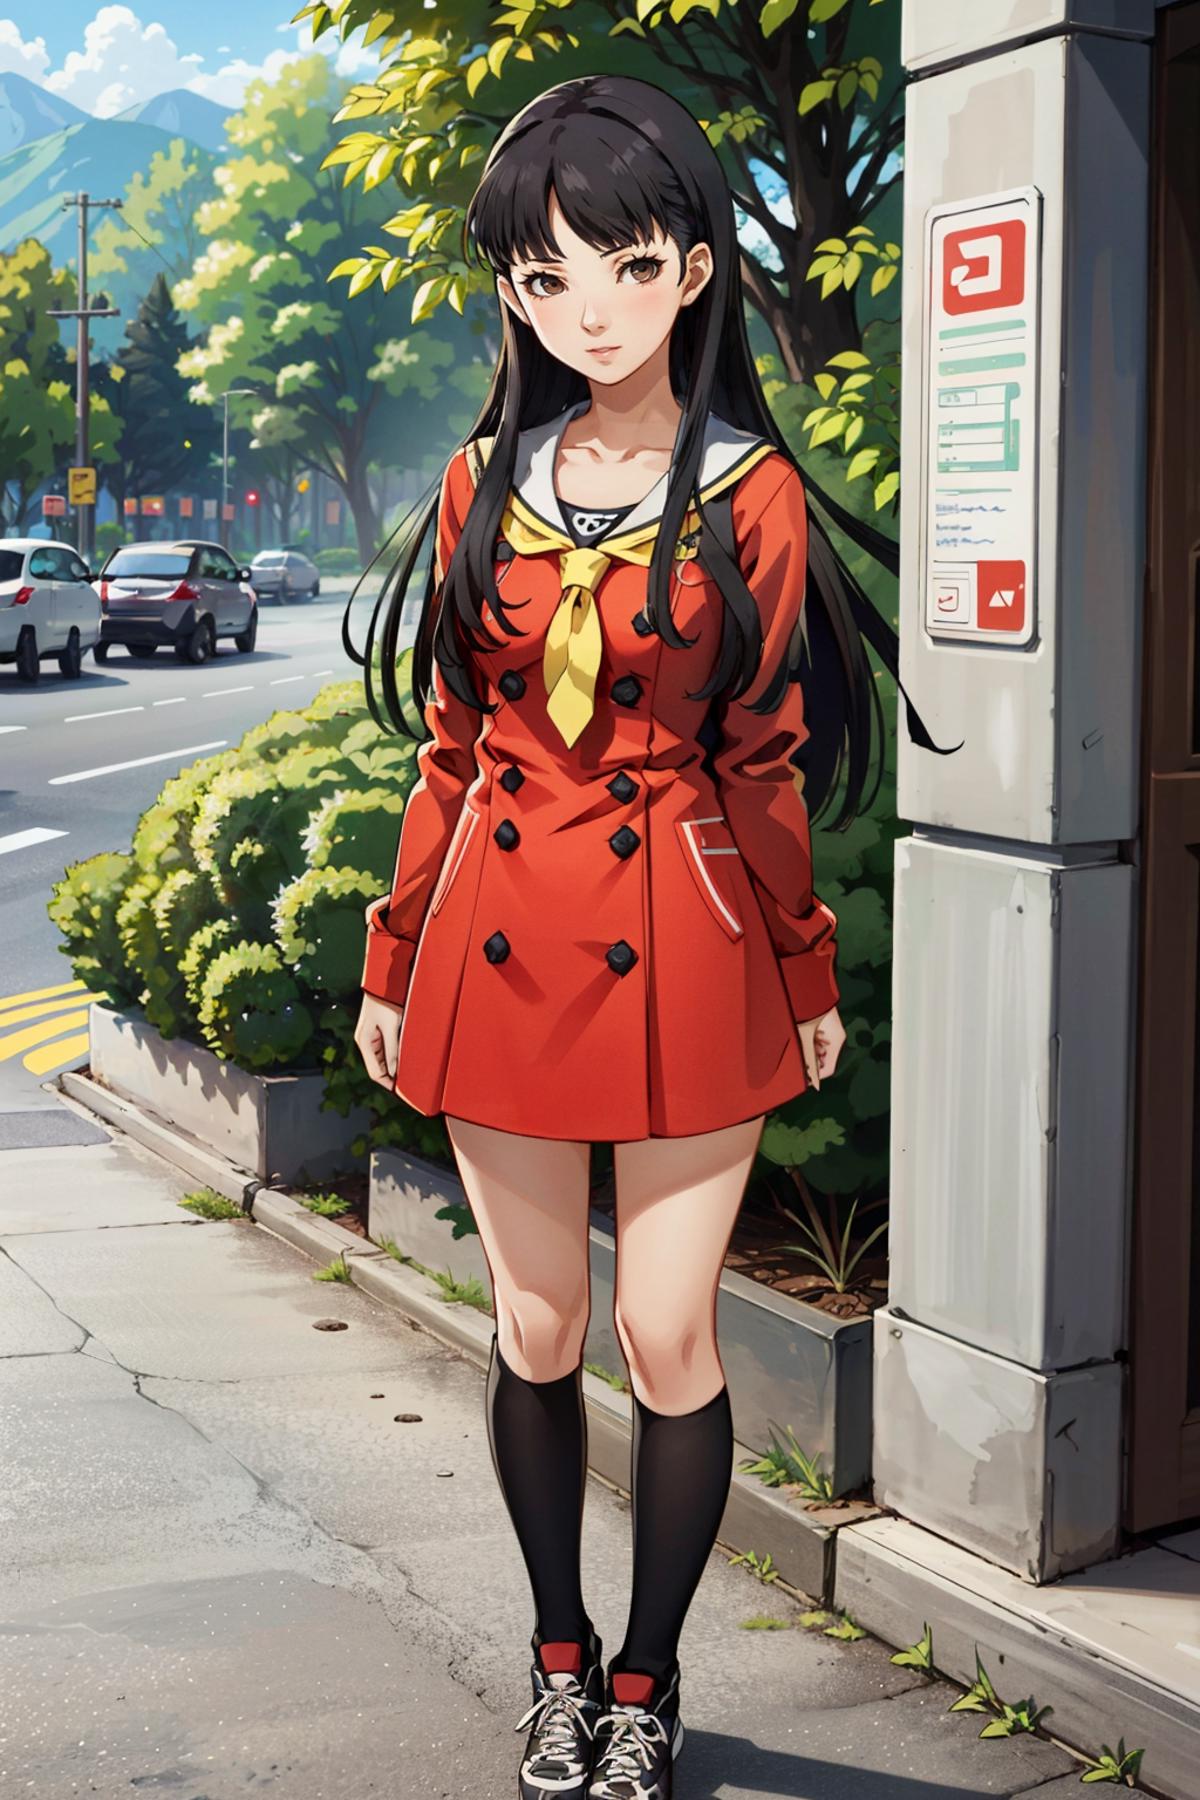 Yukiko Amagi from Persona 4 image by BloodRedKittie